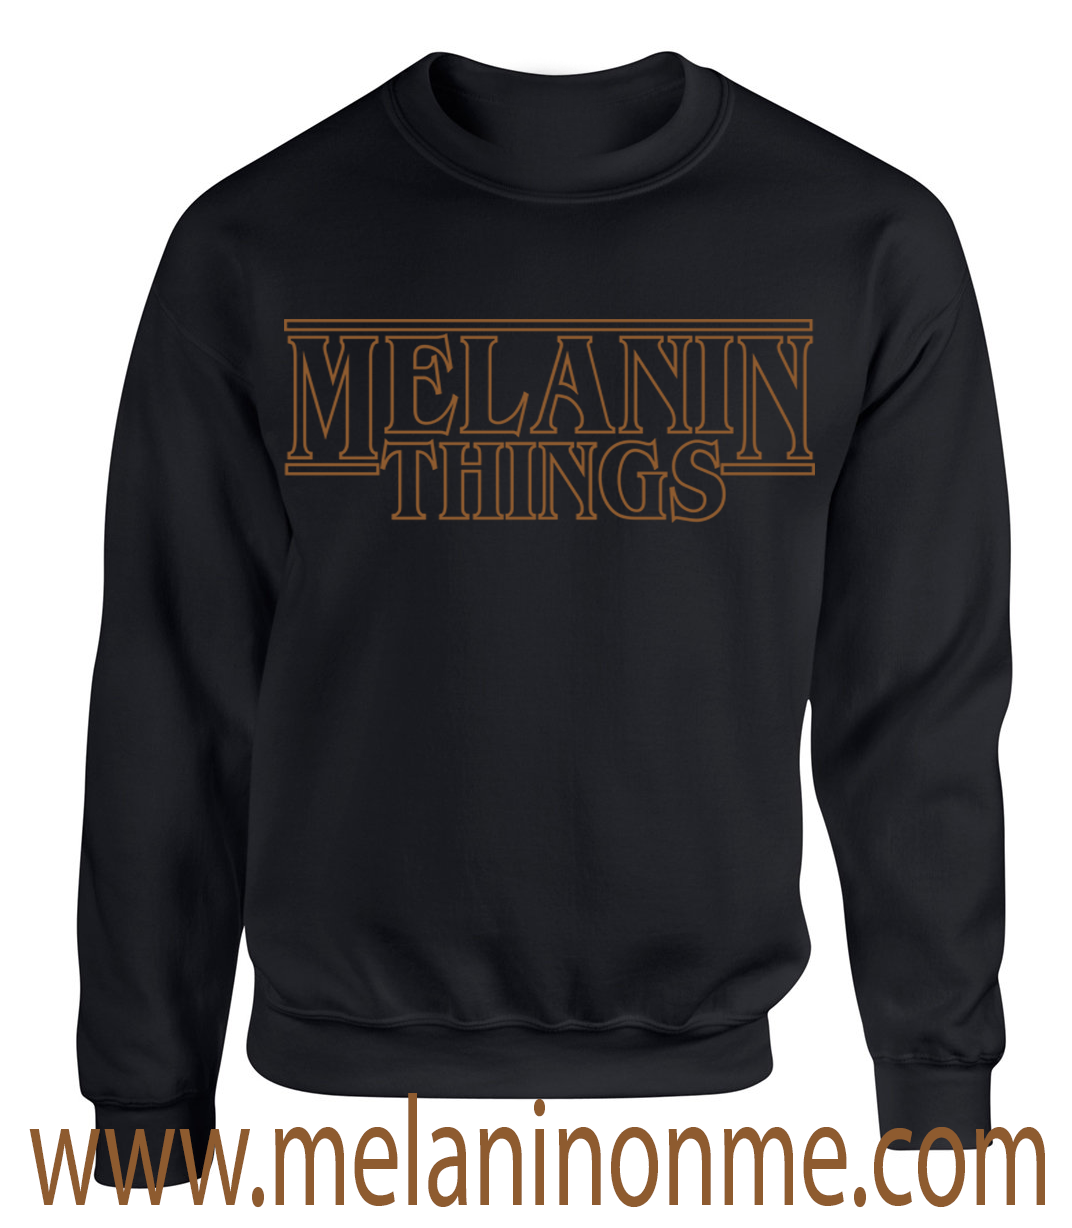 Melanin Stranger Things (Limited Edition) Sweatshirt